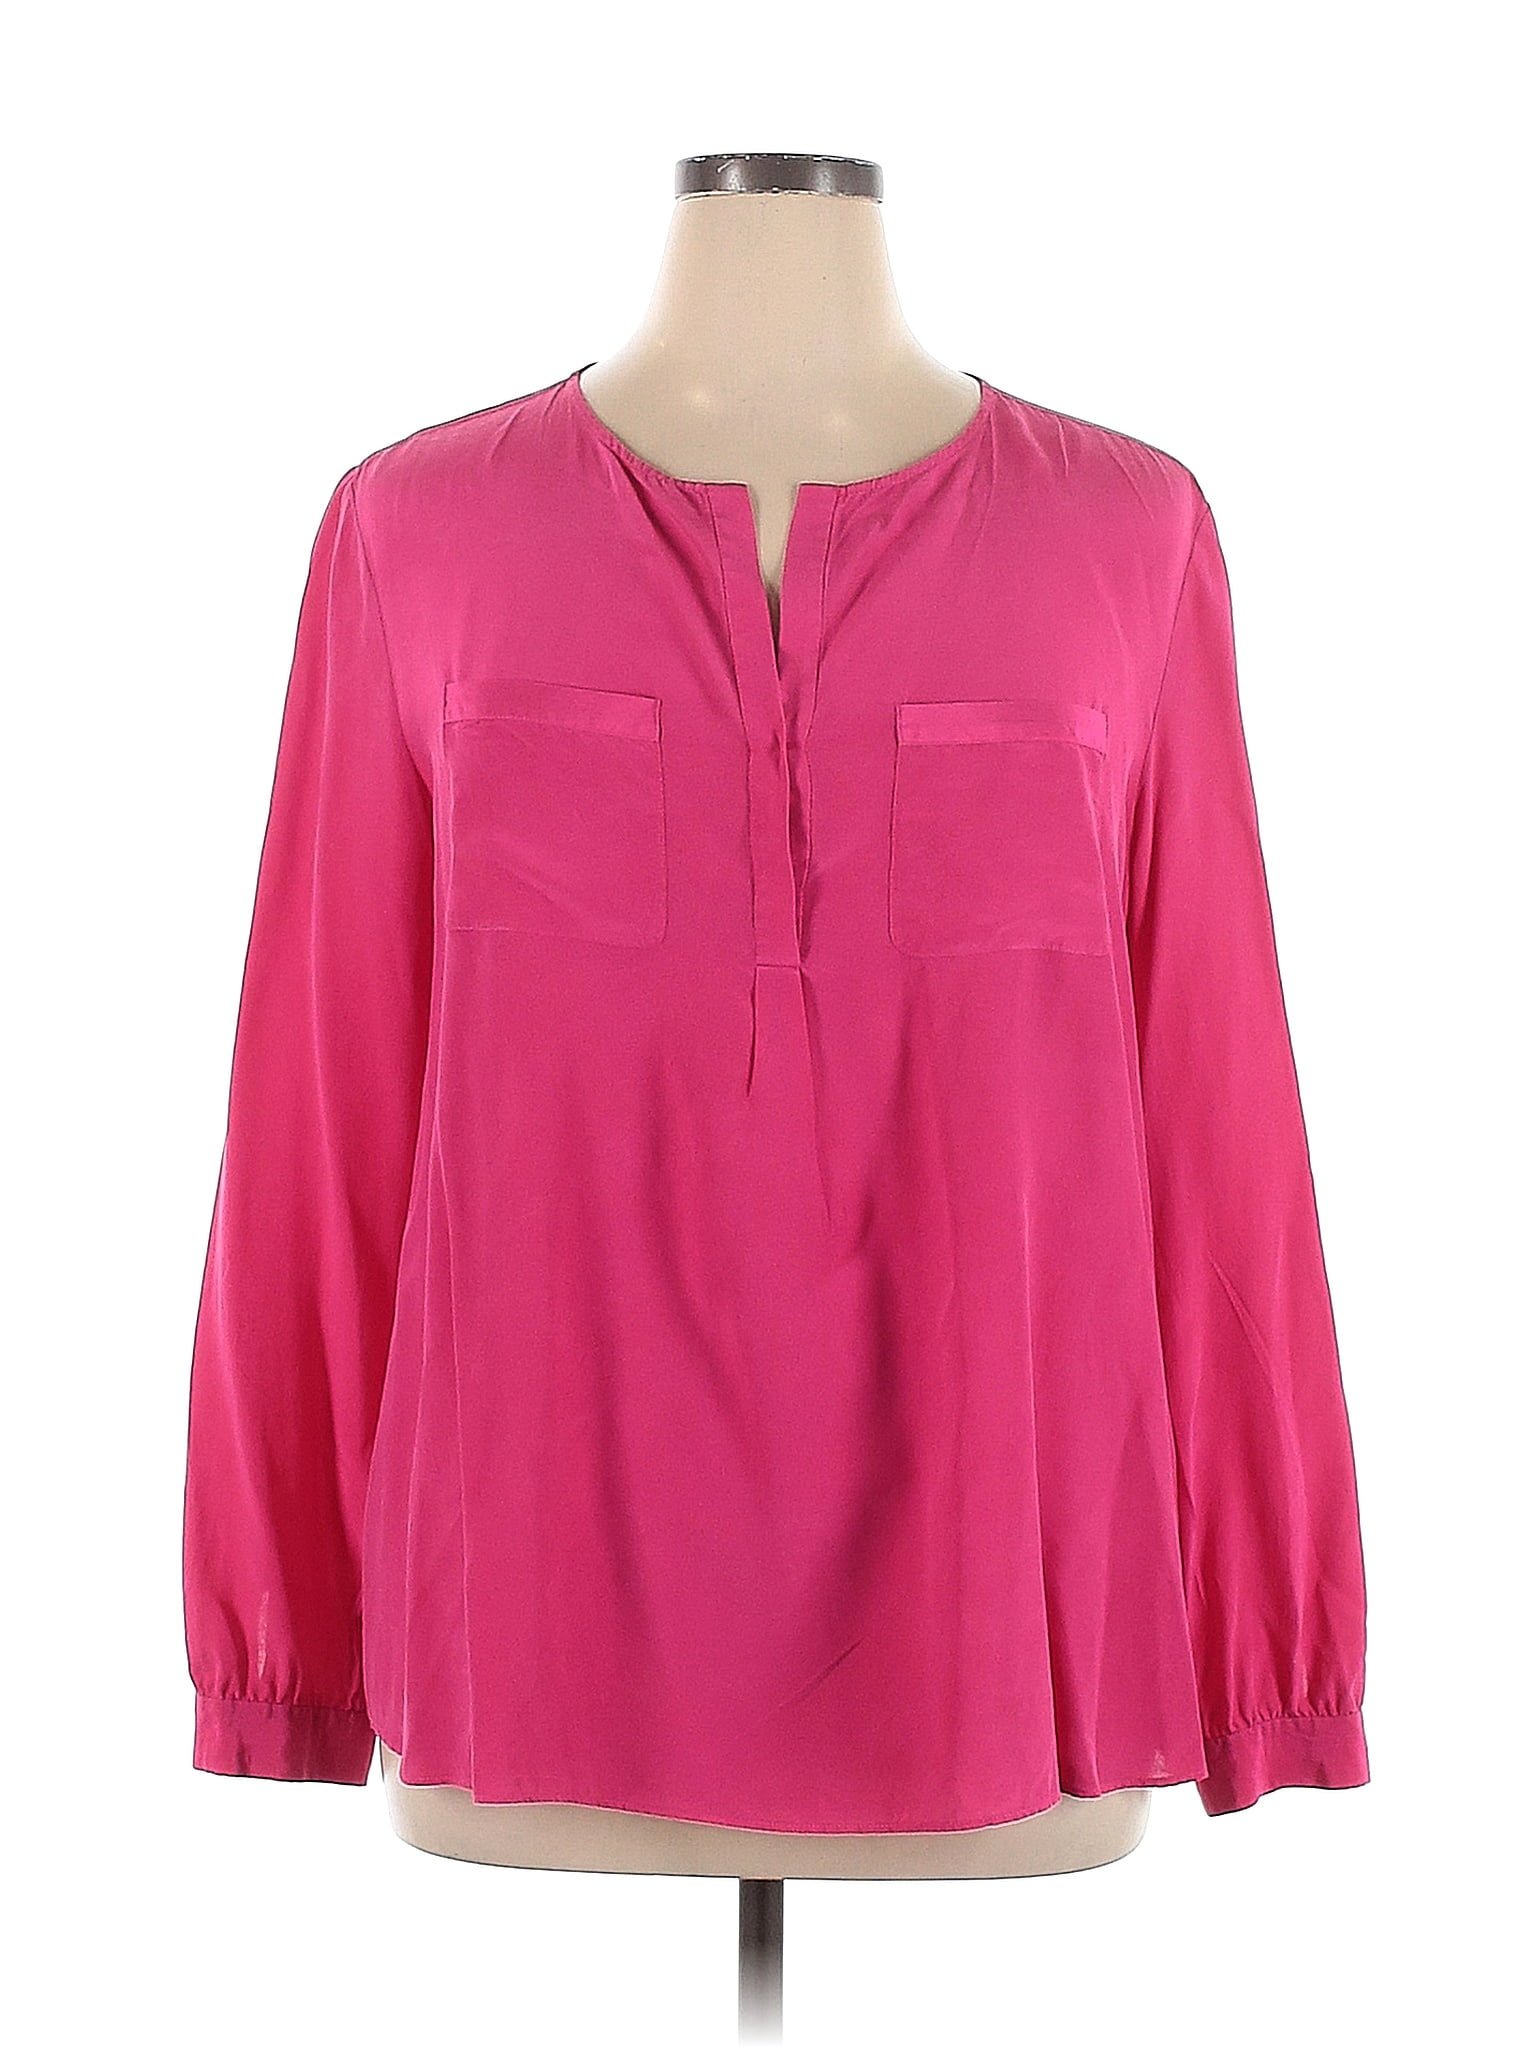 Lafayette 148 New York 100% Silk Pink Long Sleeve Blouse Size 16 - 82% ...